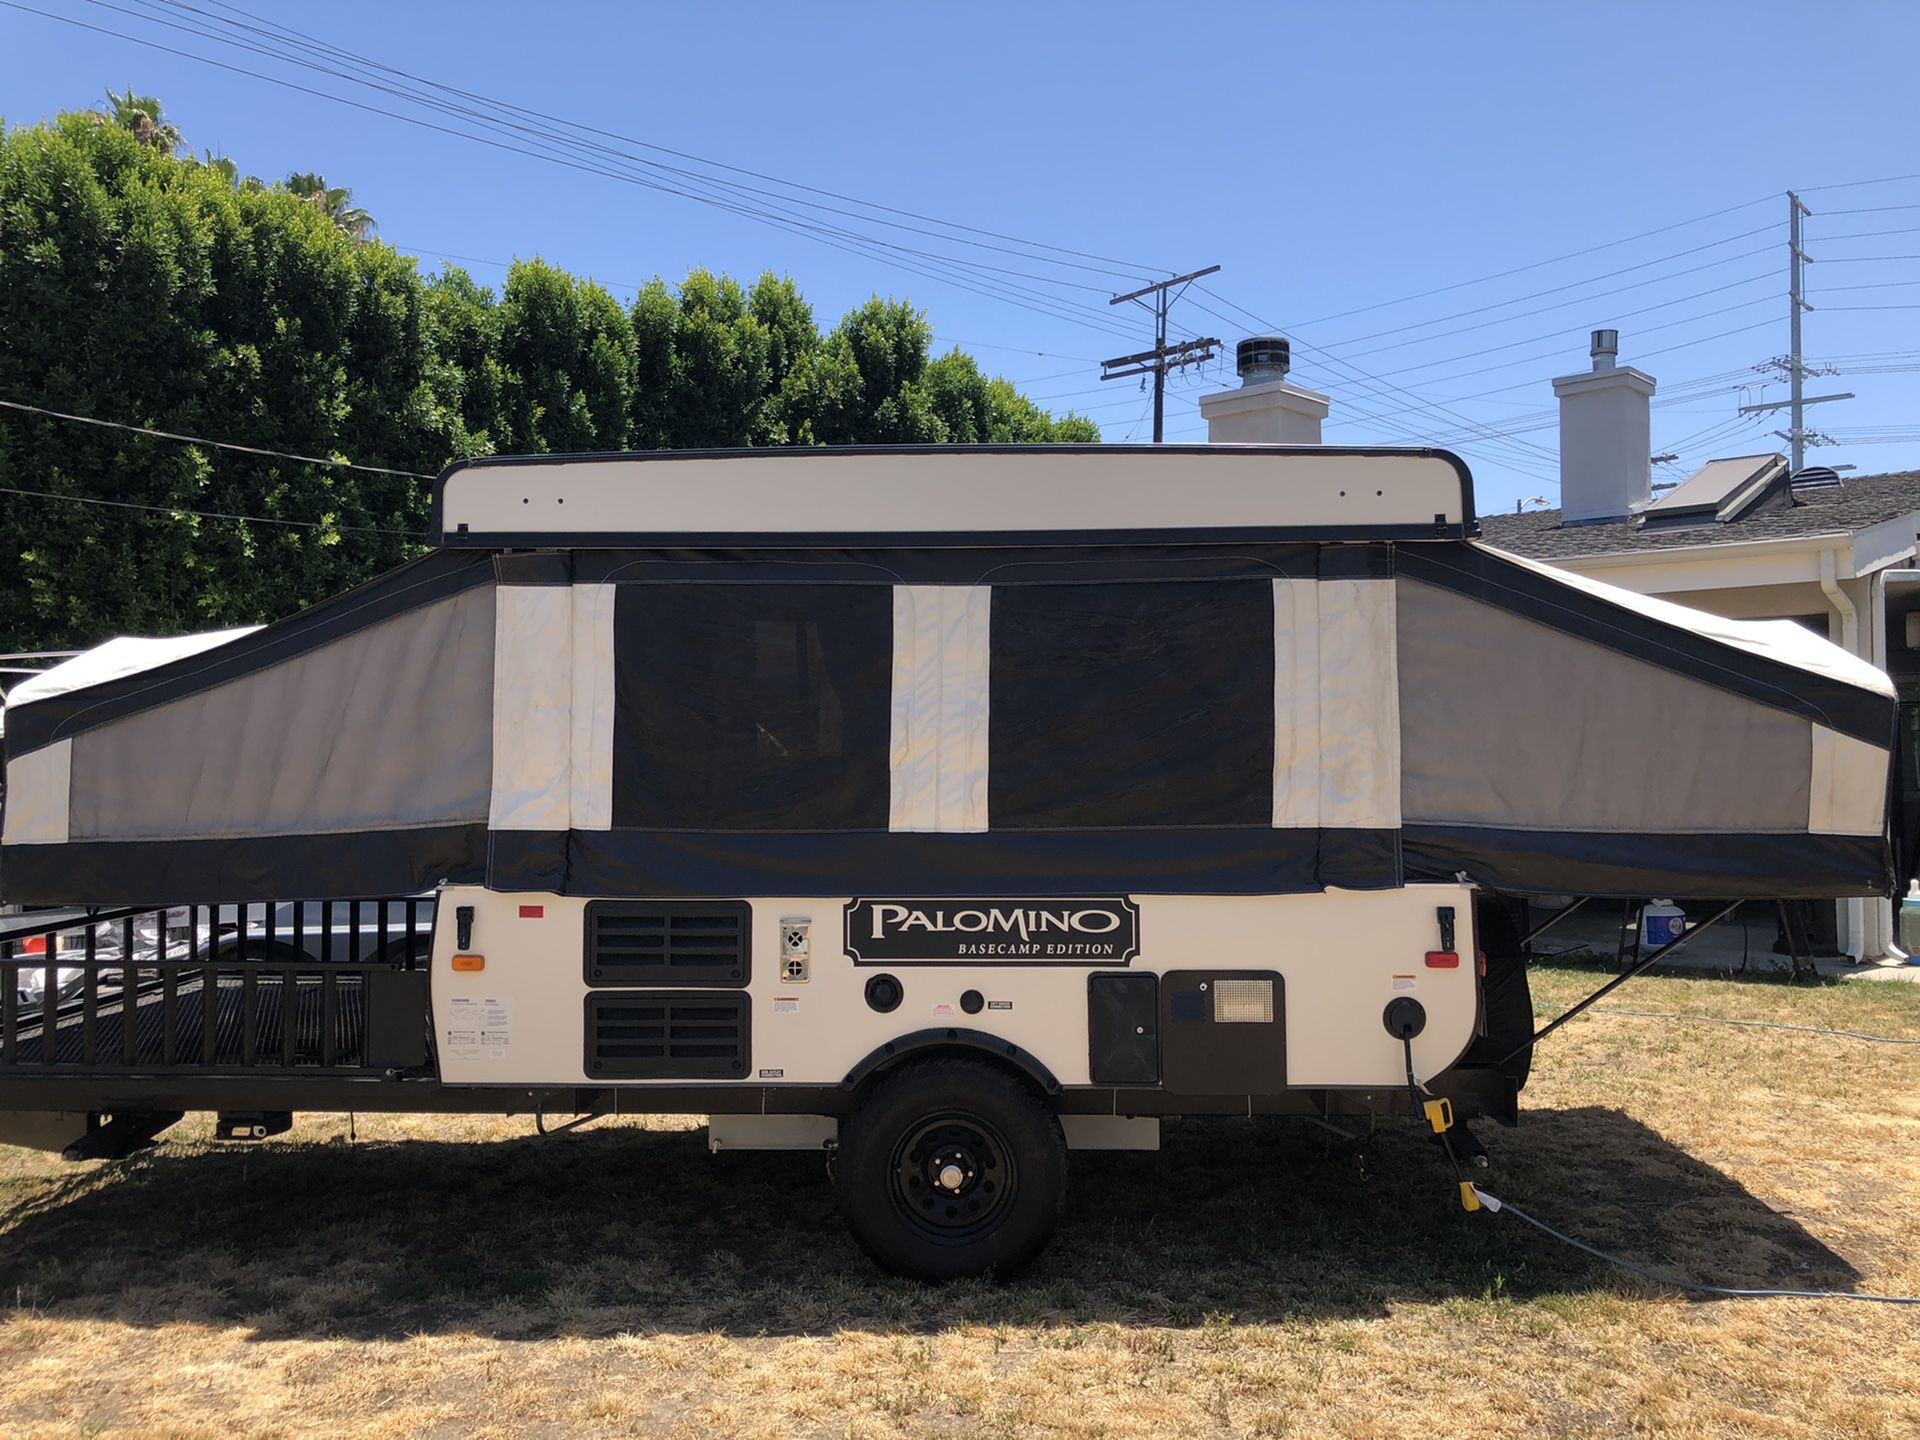 2015/2018 Forest river Palomino base Camp toy hauler pop up